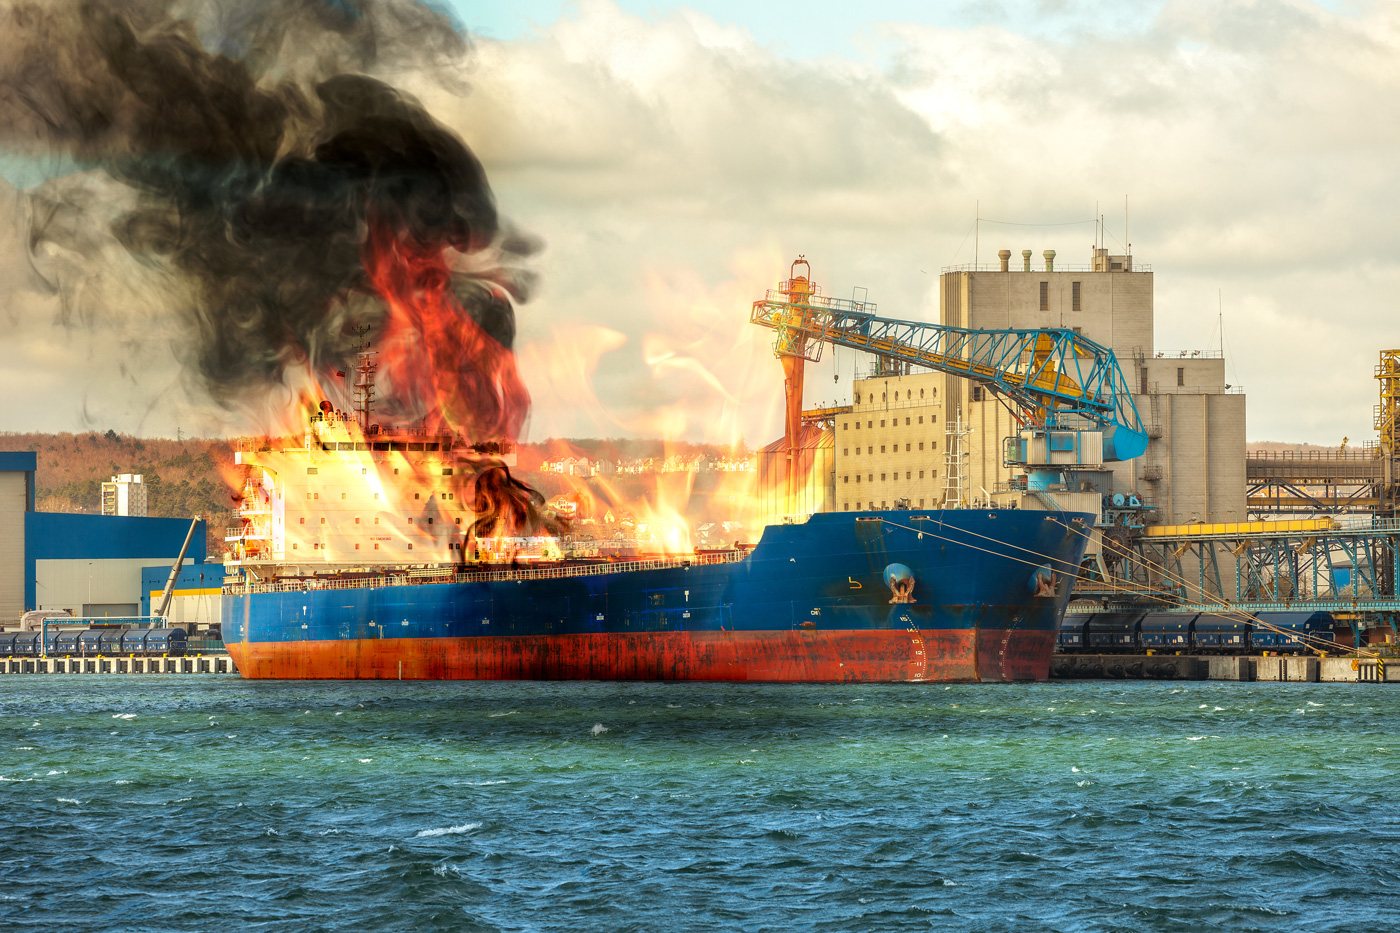 a cargo ship on fire